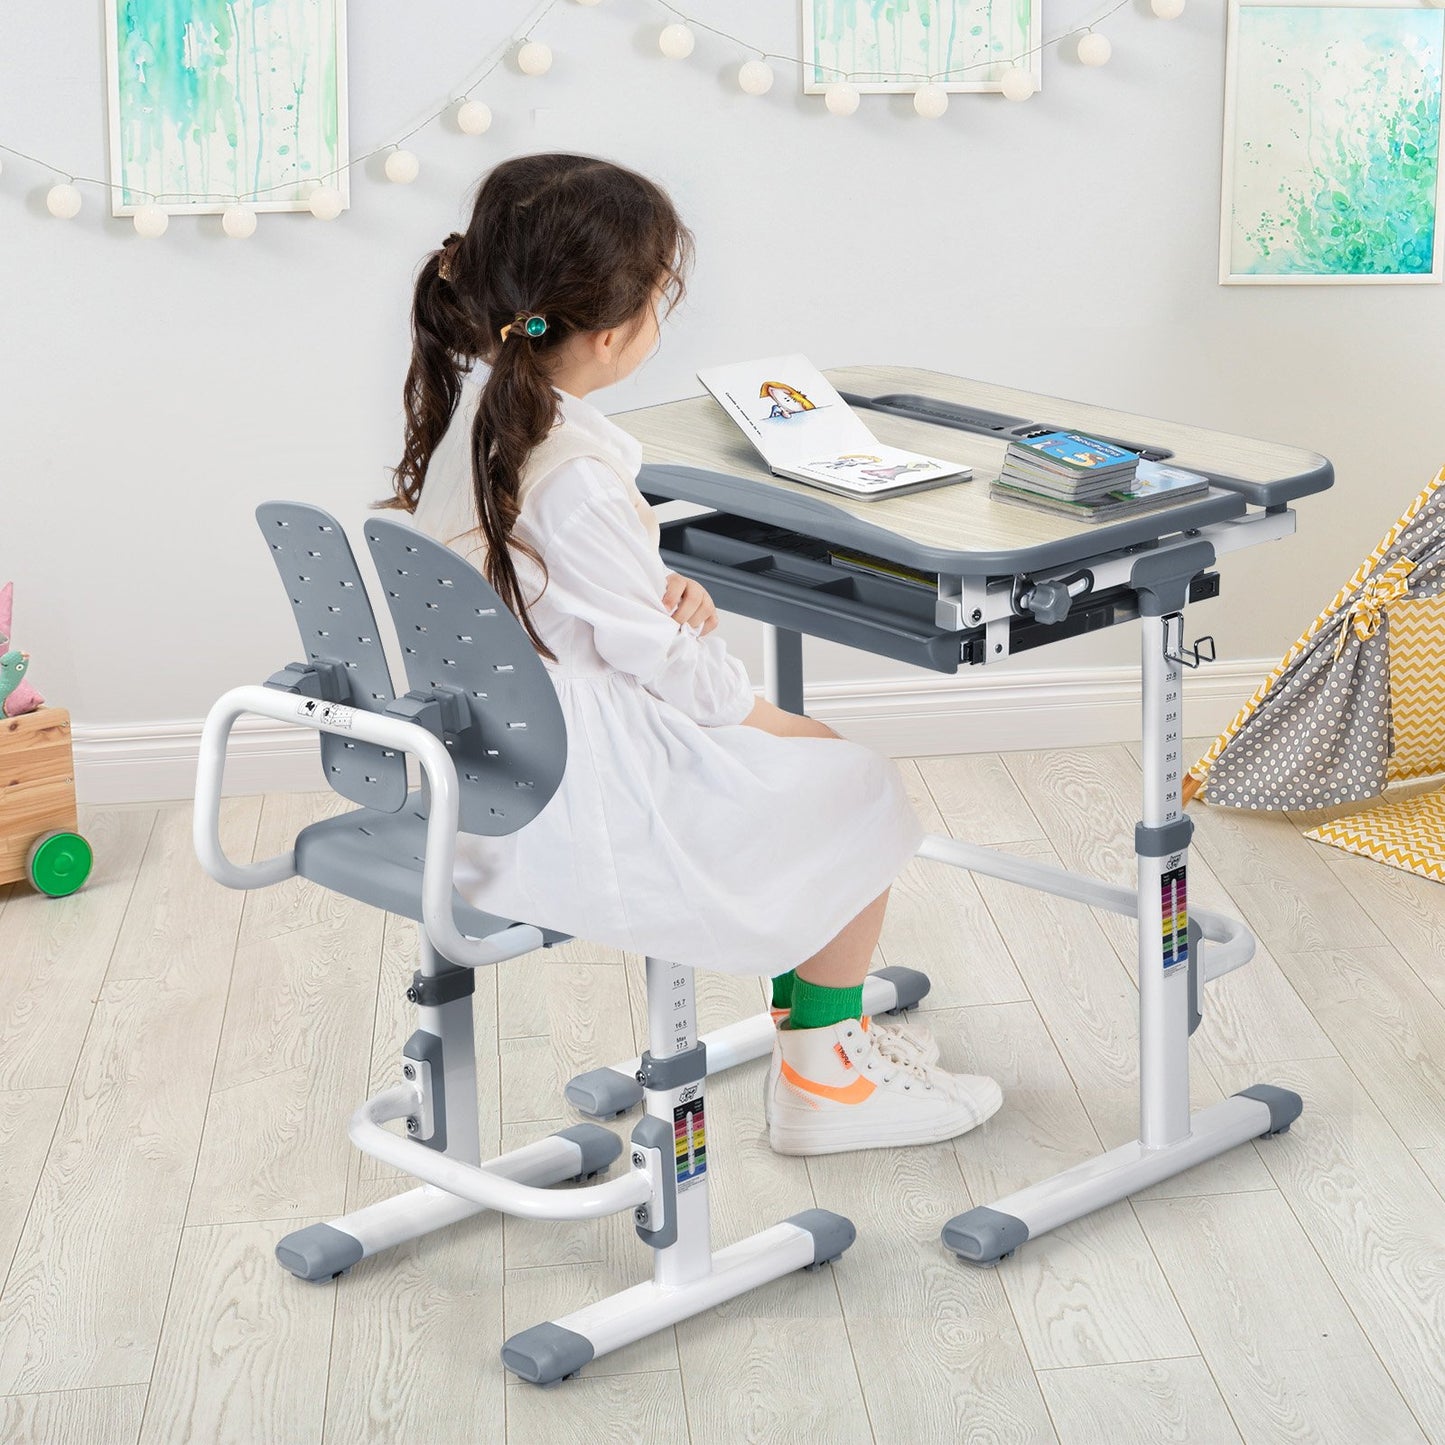 Height Adjustable Kids Study Desk and Chair Set, Gray